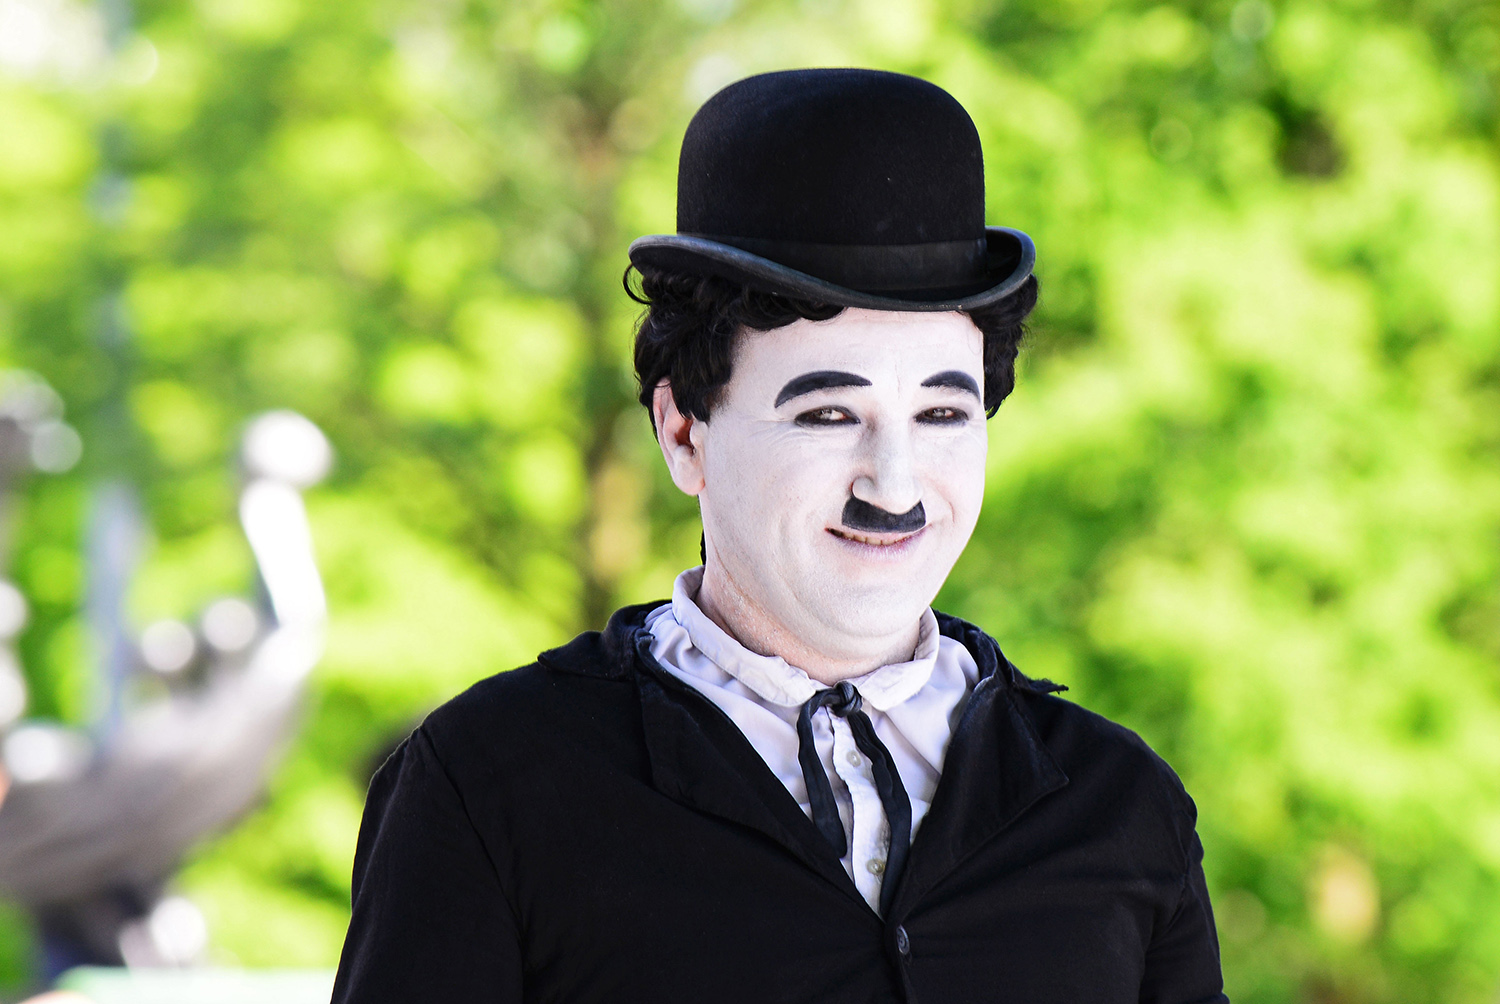 Charlie_Chaplin_London_Street_Performer_Mime.jpg